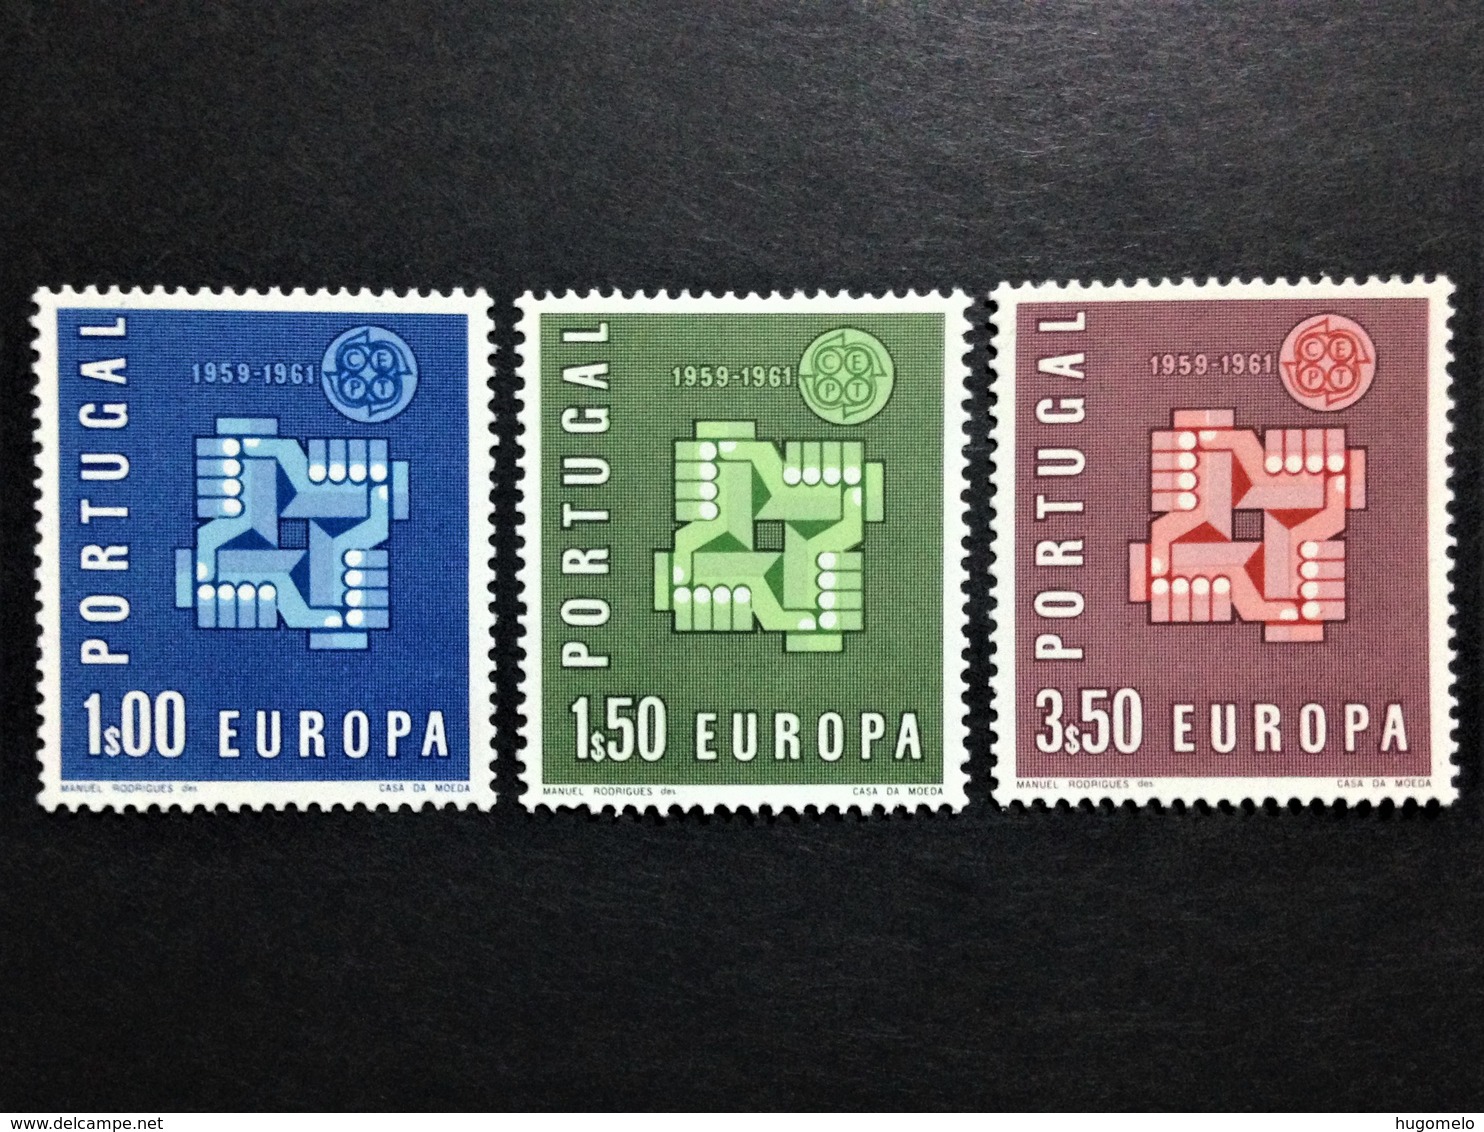 Portugal, Unused Stamps, "Europa Cept", 1961 - Lotes & Colecciones